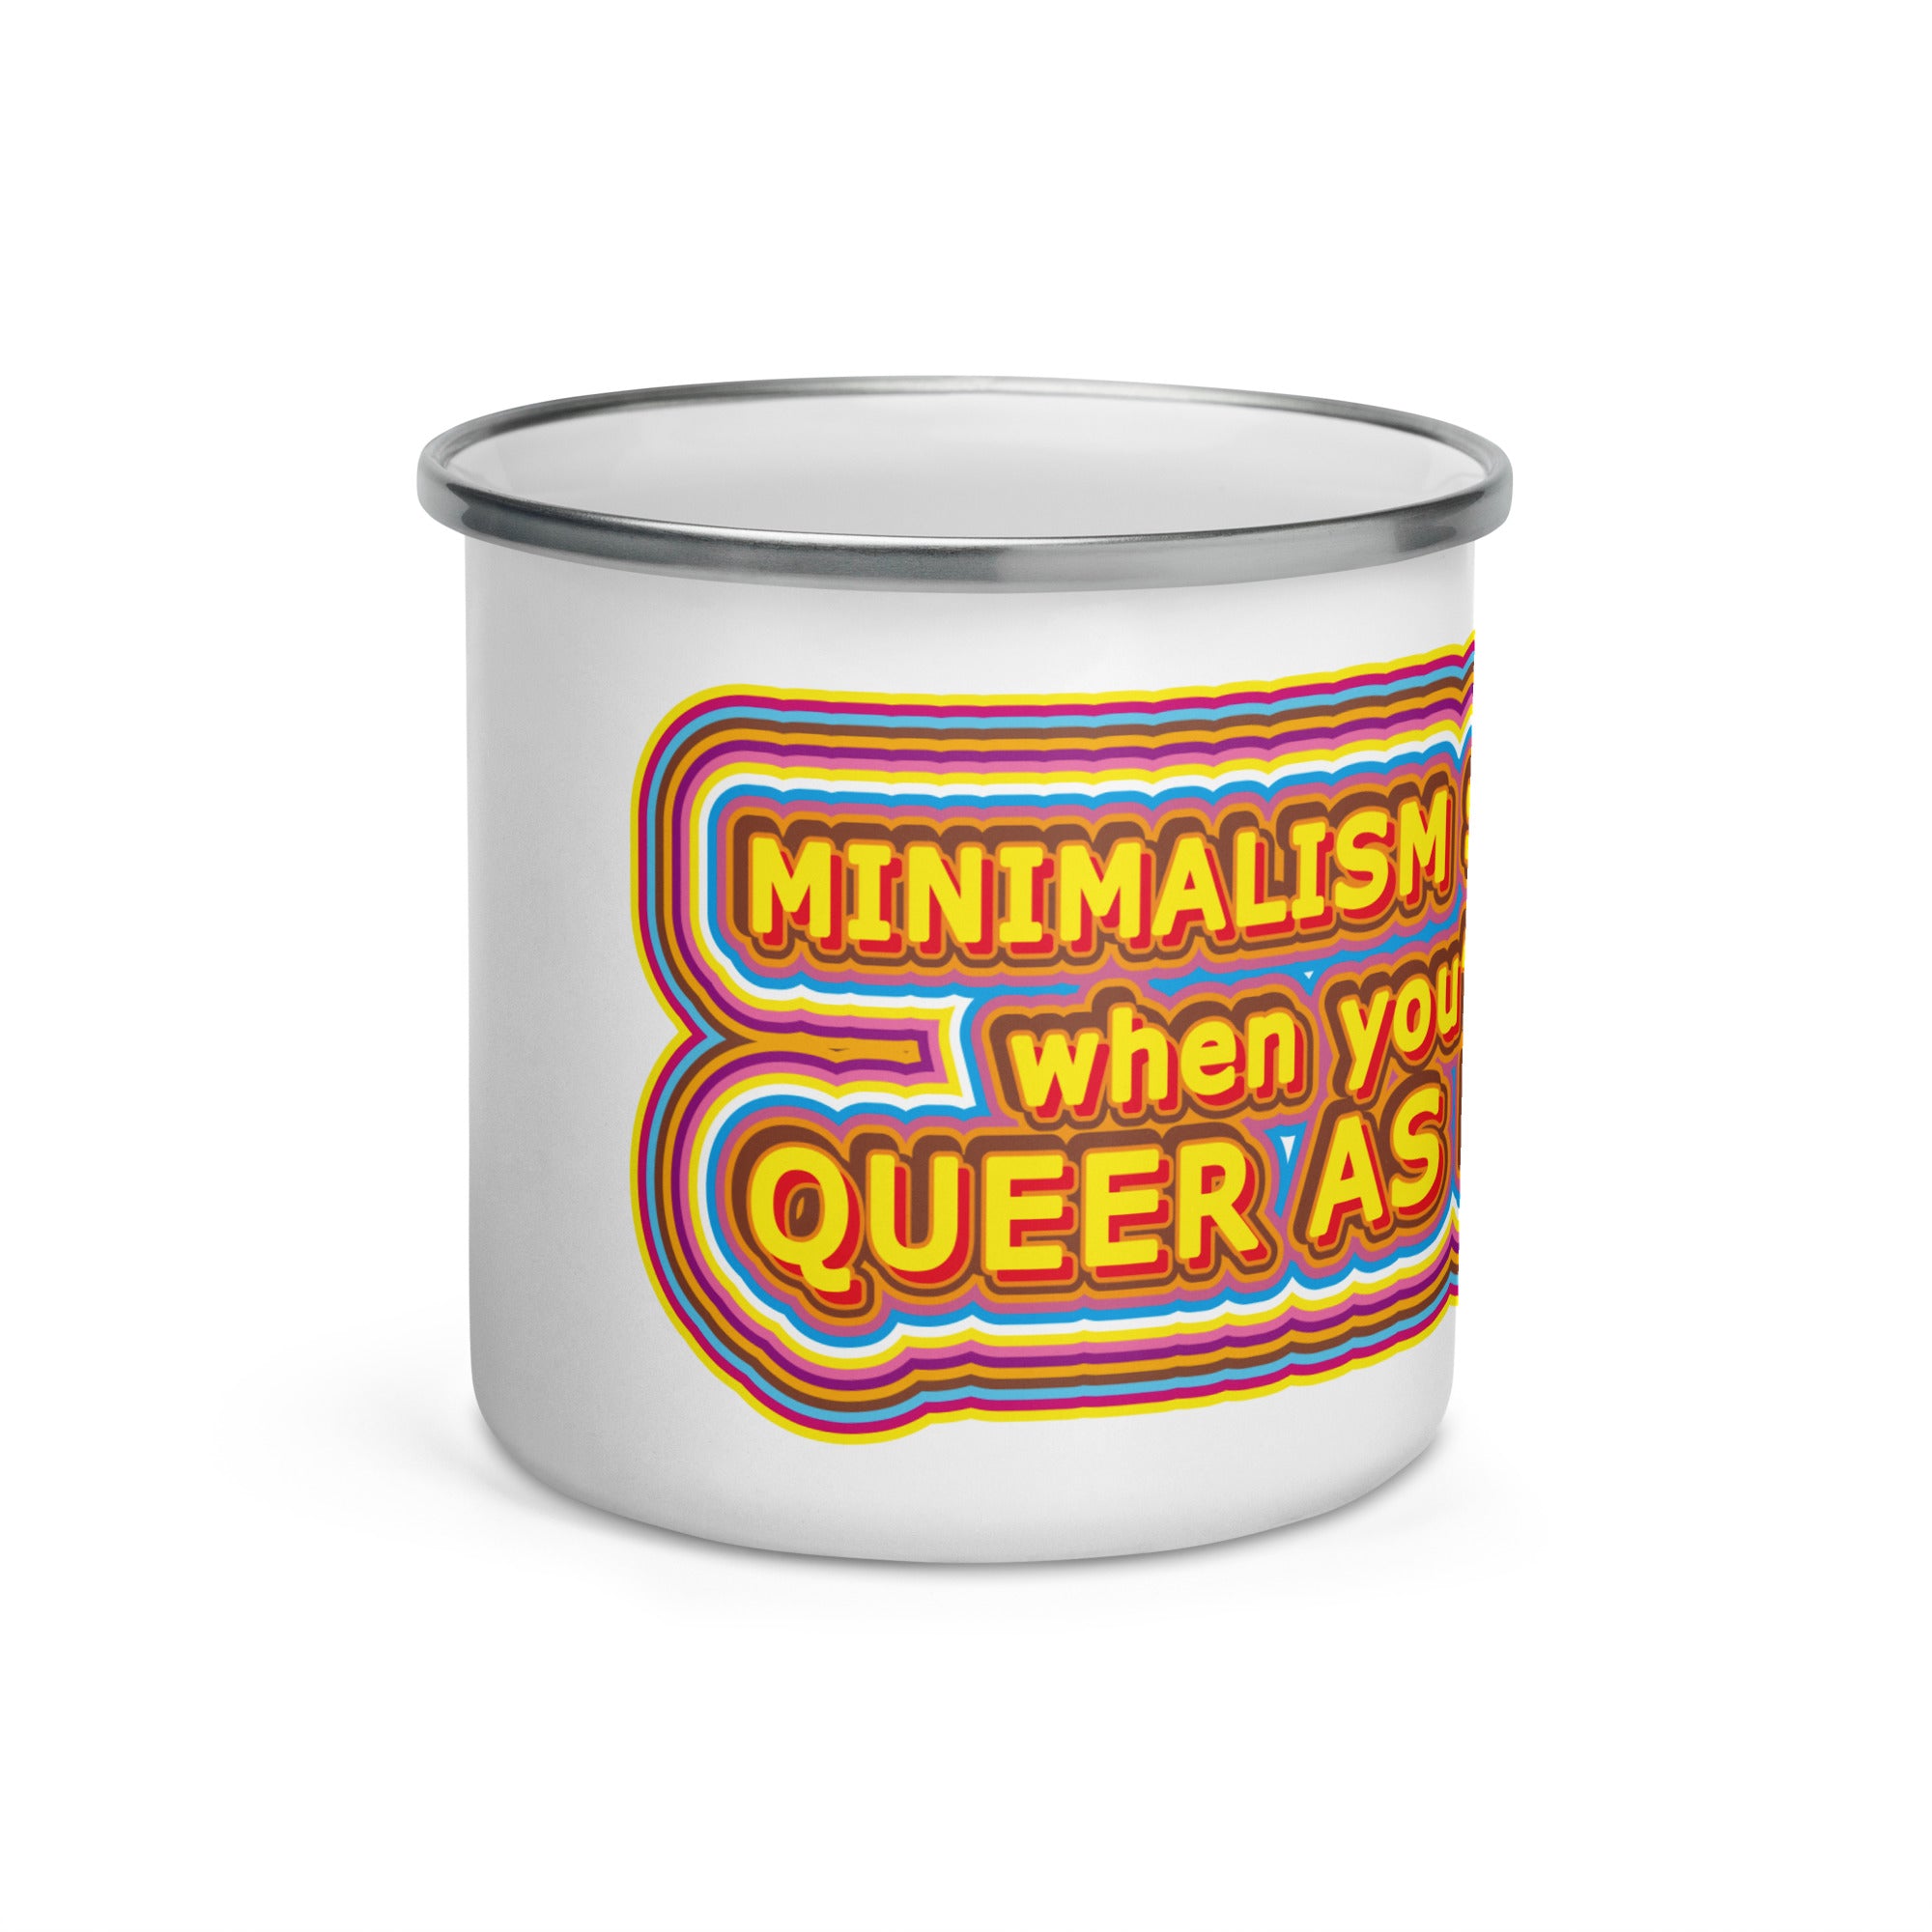 Minimalism Sucks When You're Queer As Fuck Enamel Mug